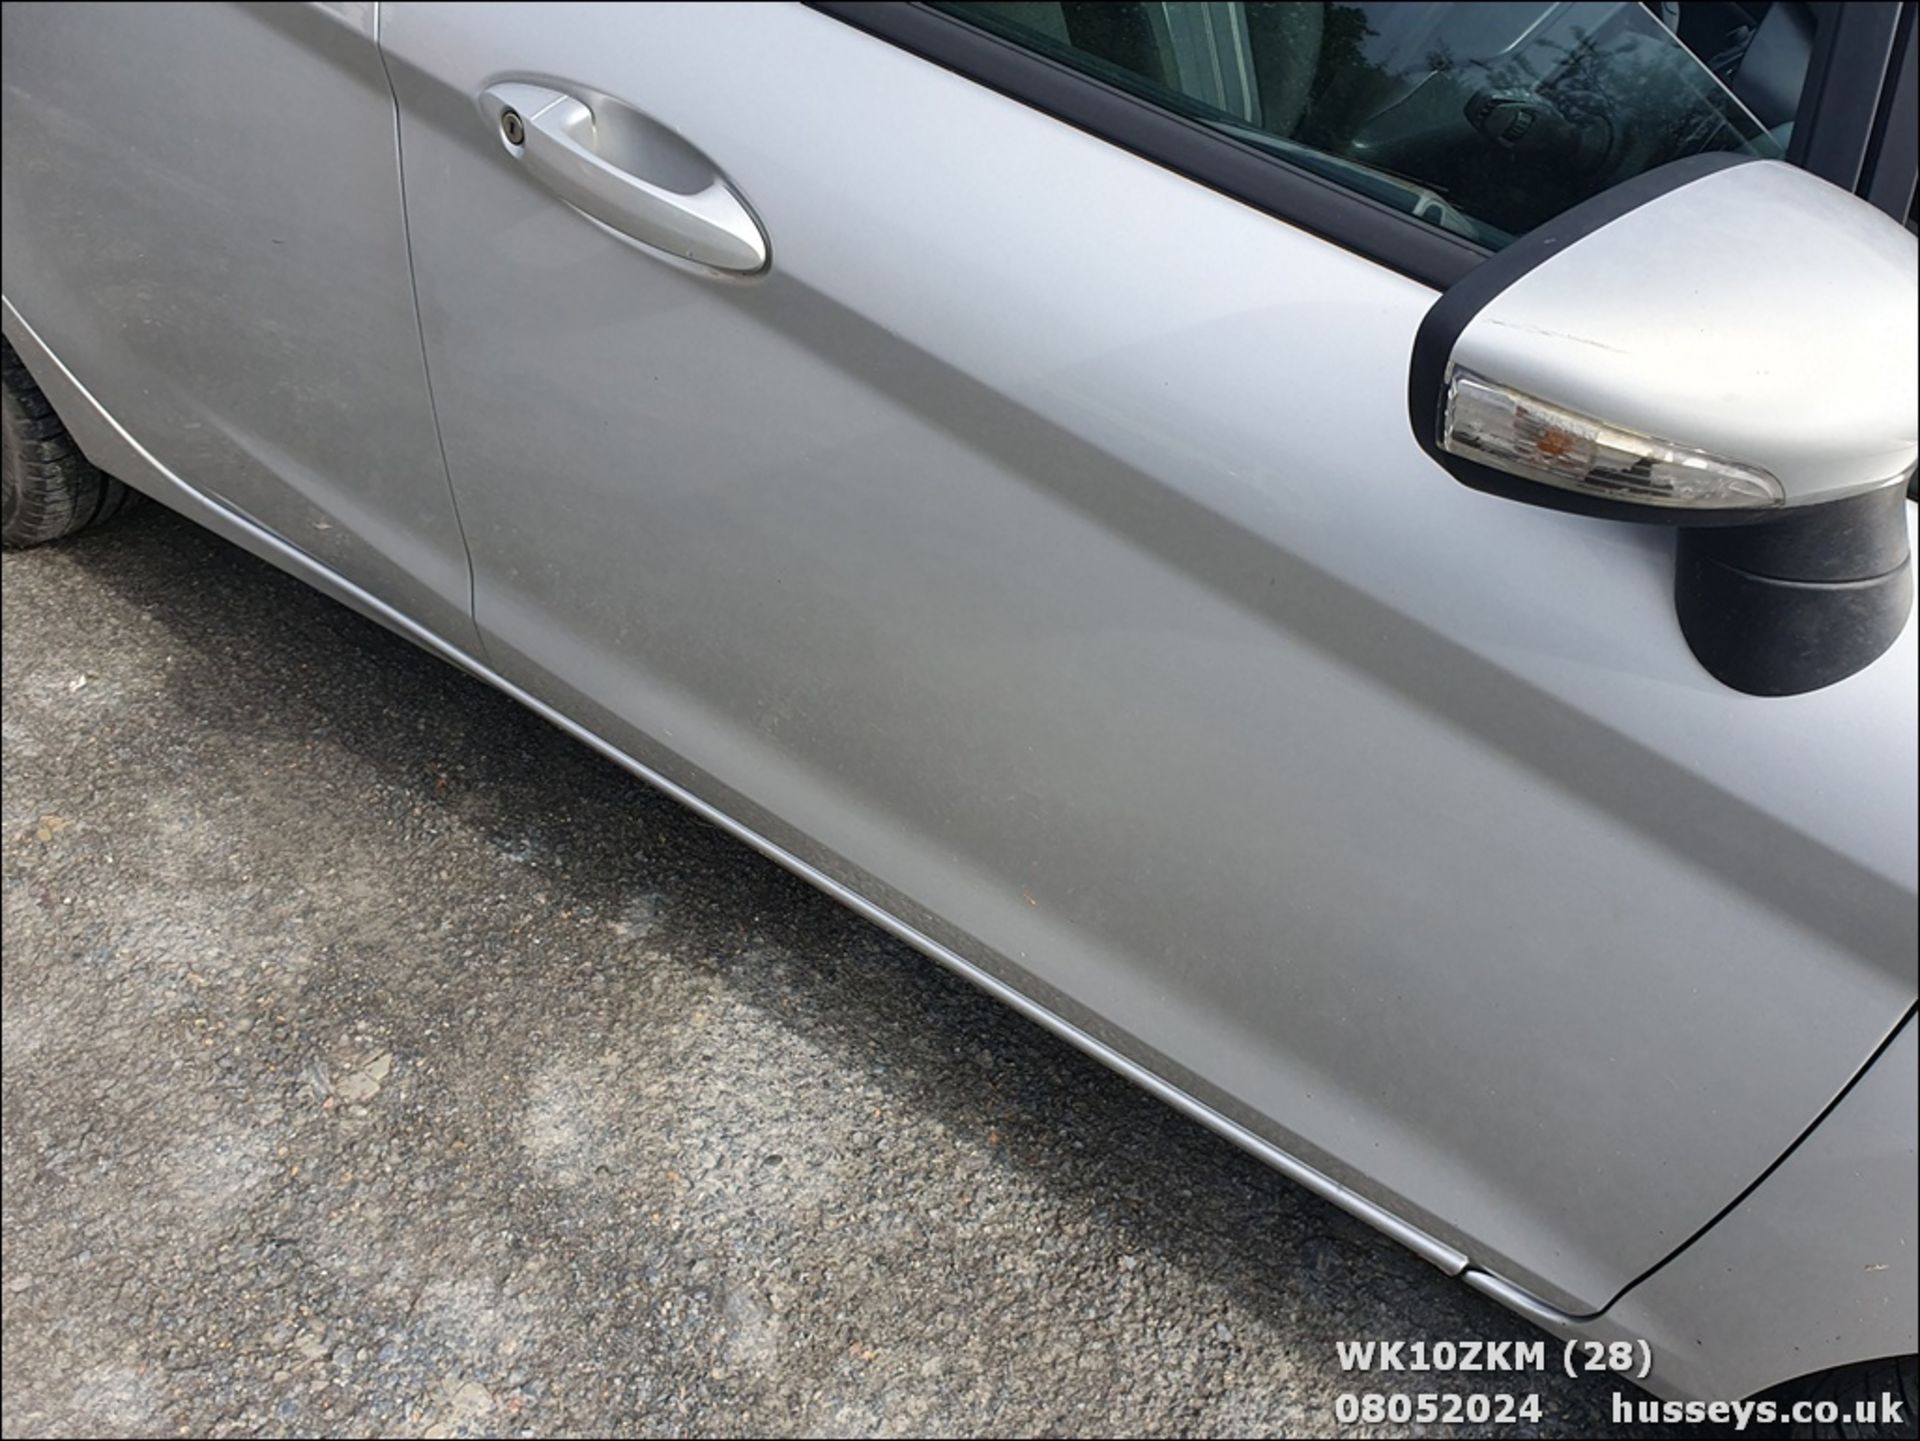 10/10 FORD FIESTA EDGE 60 - 1242cc 5dr Hatchback (Silver, 142k) - Image 29 of 50